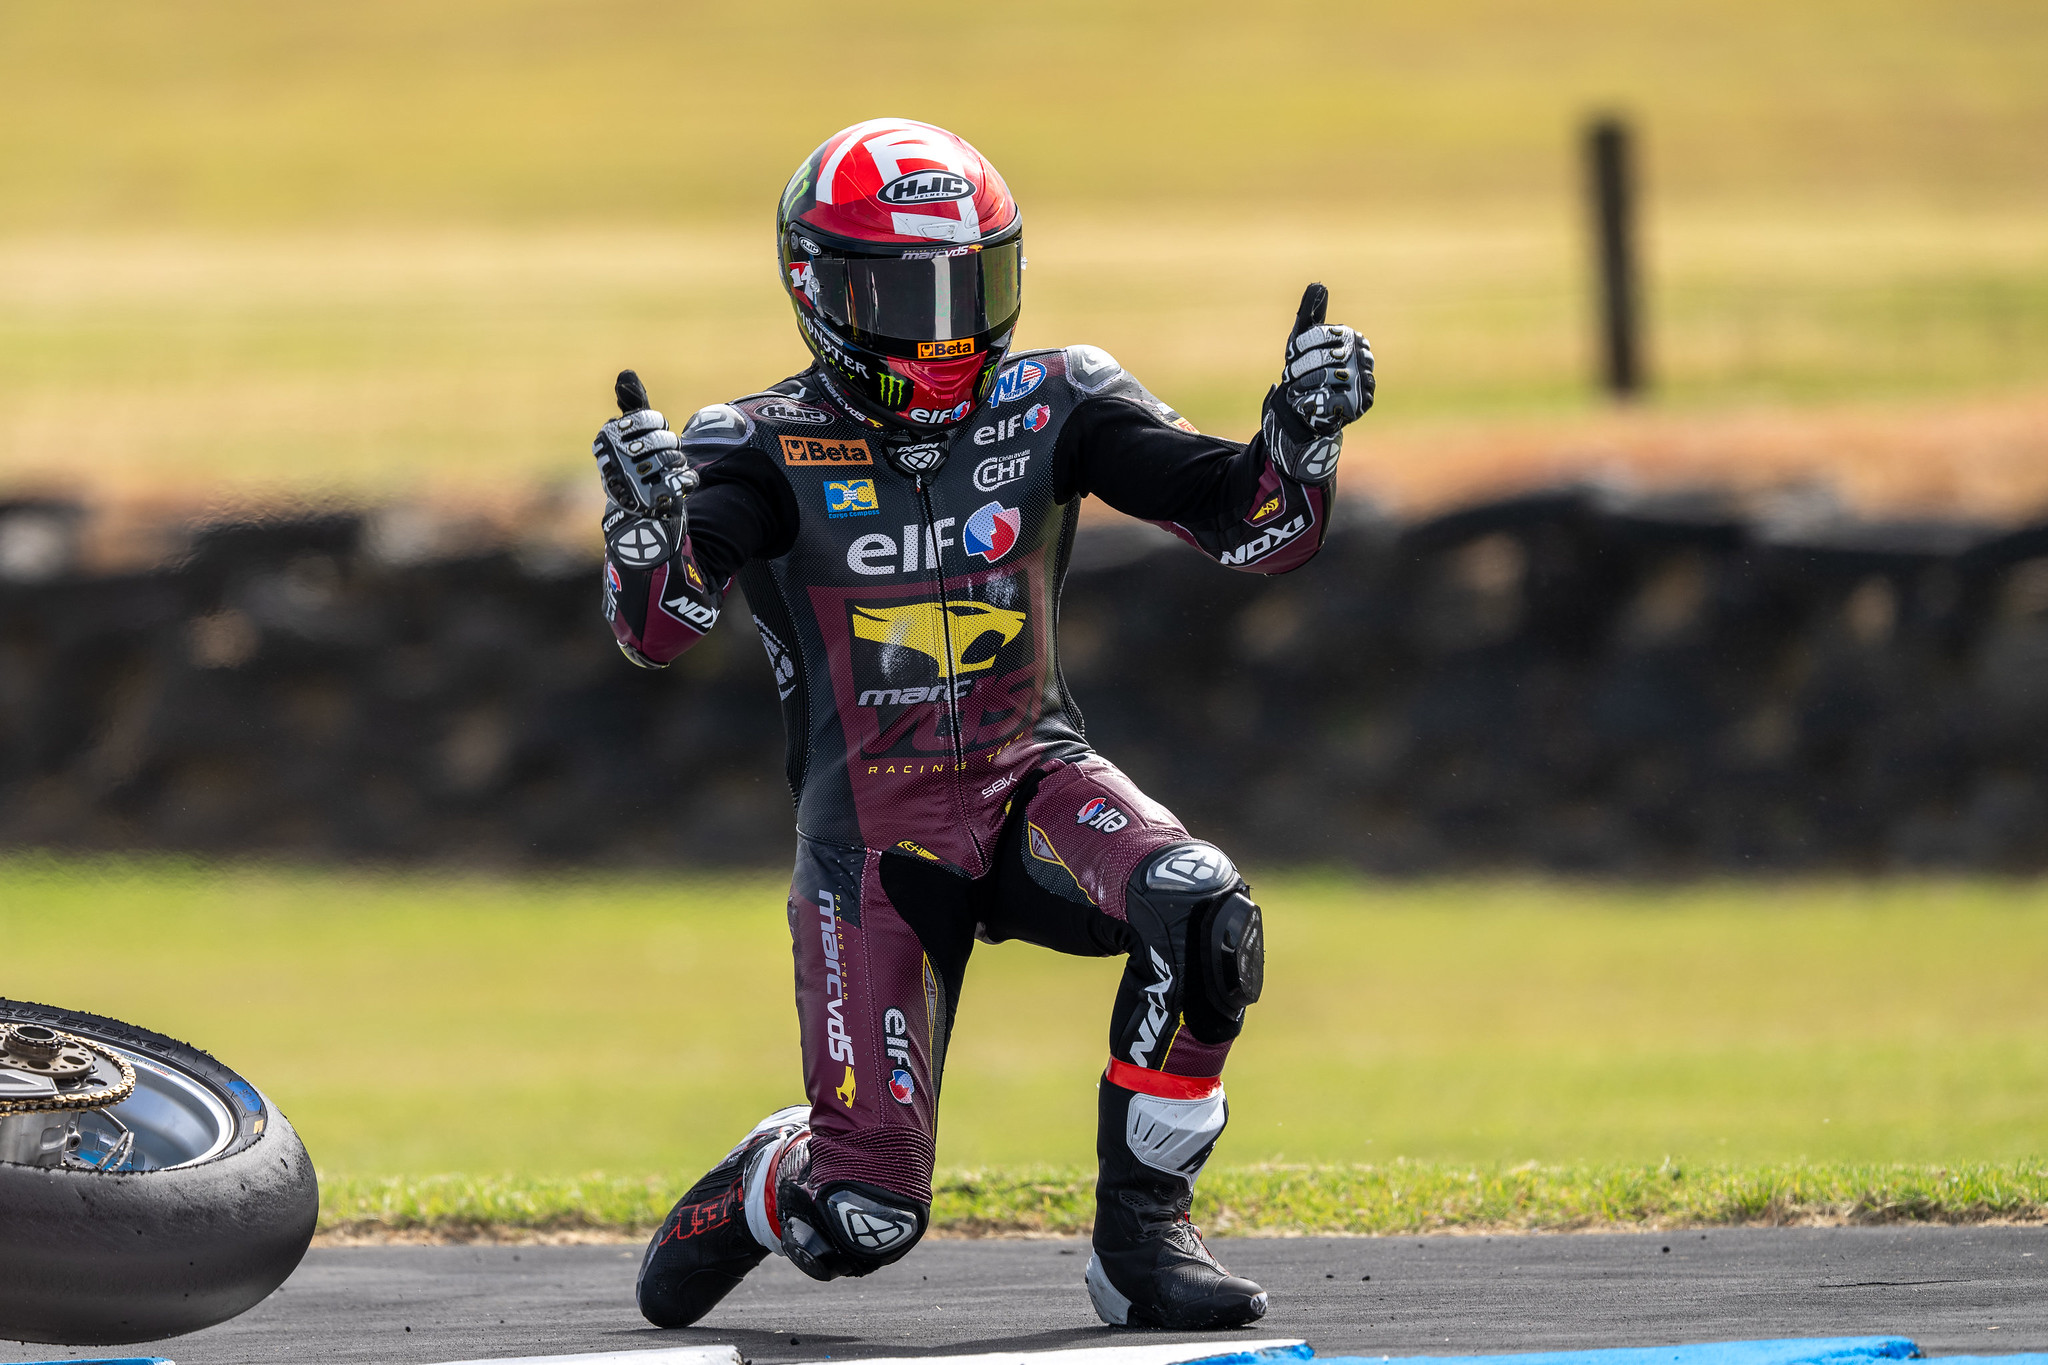 #14 Sam Lowes - GBR - ELF Marc VDS Racing Team  -  Ducati Panigale V4R